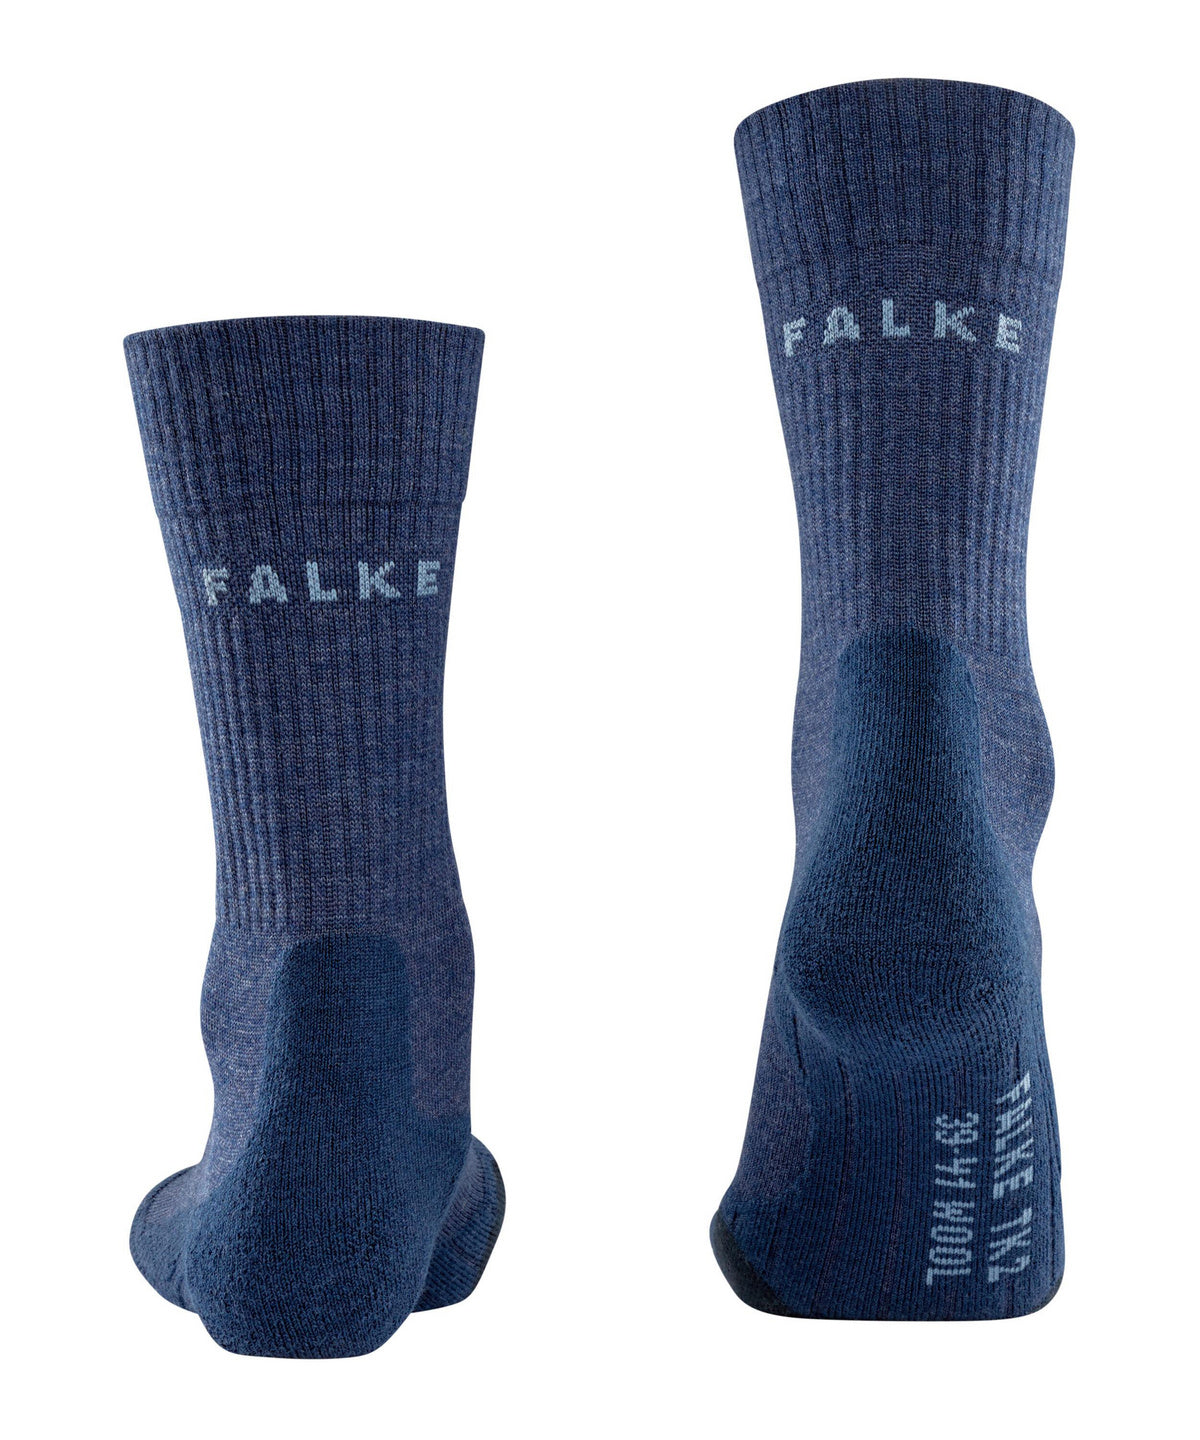 Falke TK2 Wool - Calza Trekking Uomo - Neverland Firenze